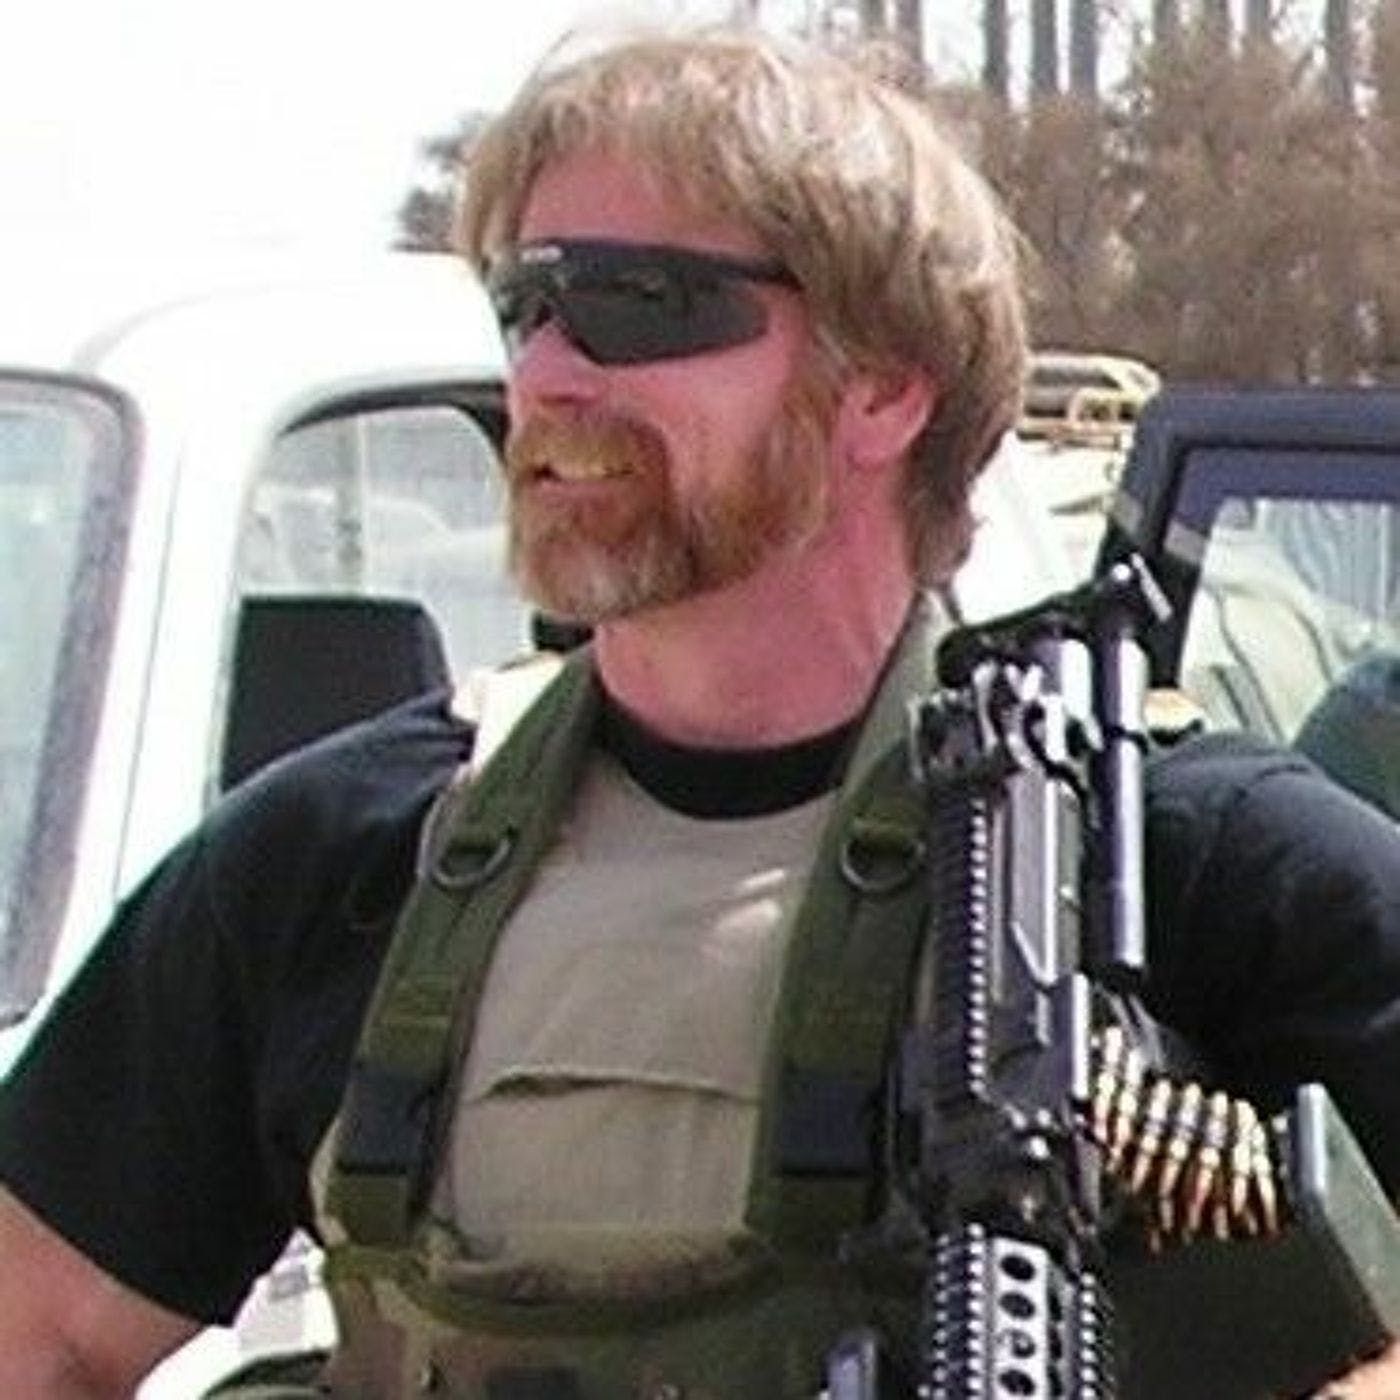 SEAL Team Six Operator Chuck O'Conner on Explosive Breaching, Ep. 86